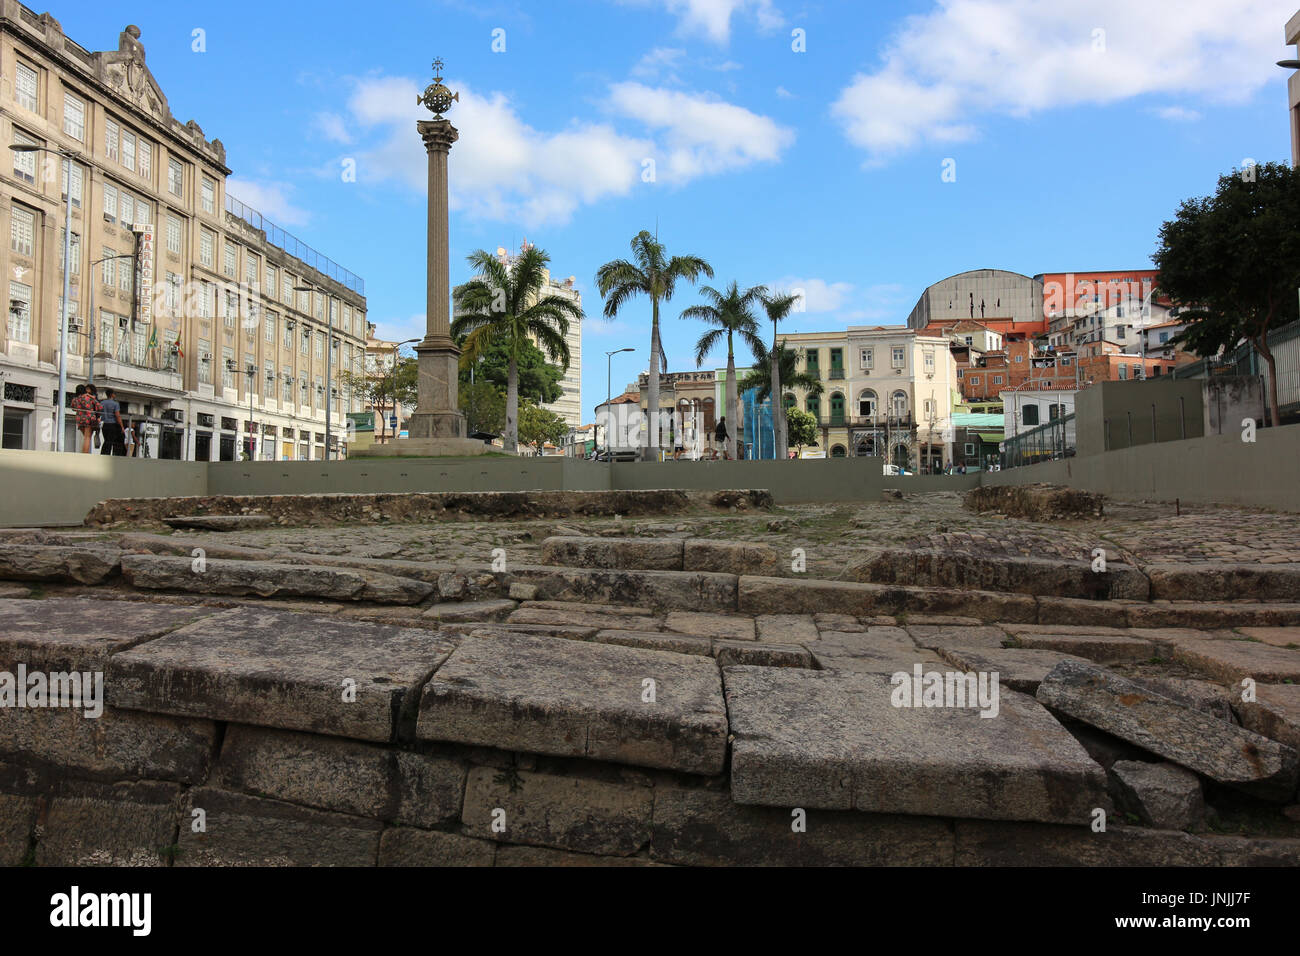 Rio de Janeiro, Brazil, July 29, 2017: Cais do Valongo (Valongo Wharf), an archaeological site recognized by Unesco as a World Heritage Site. The site Stock Photo